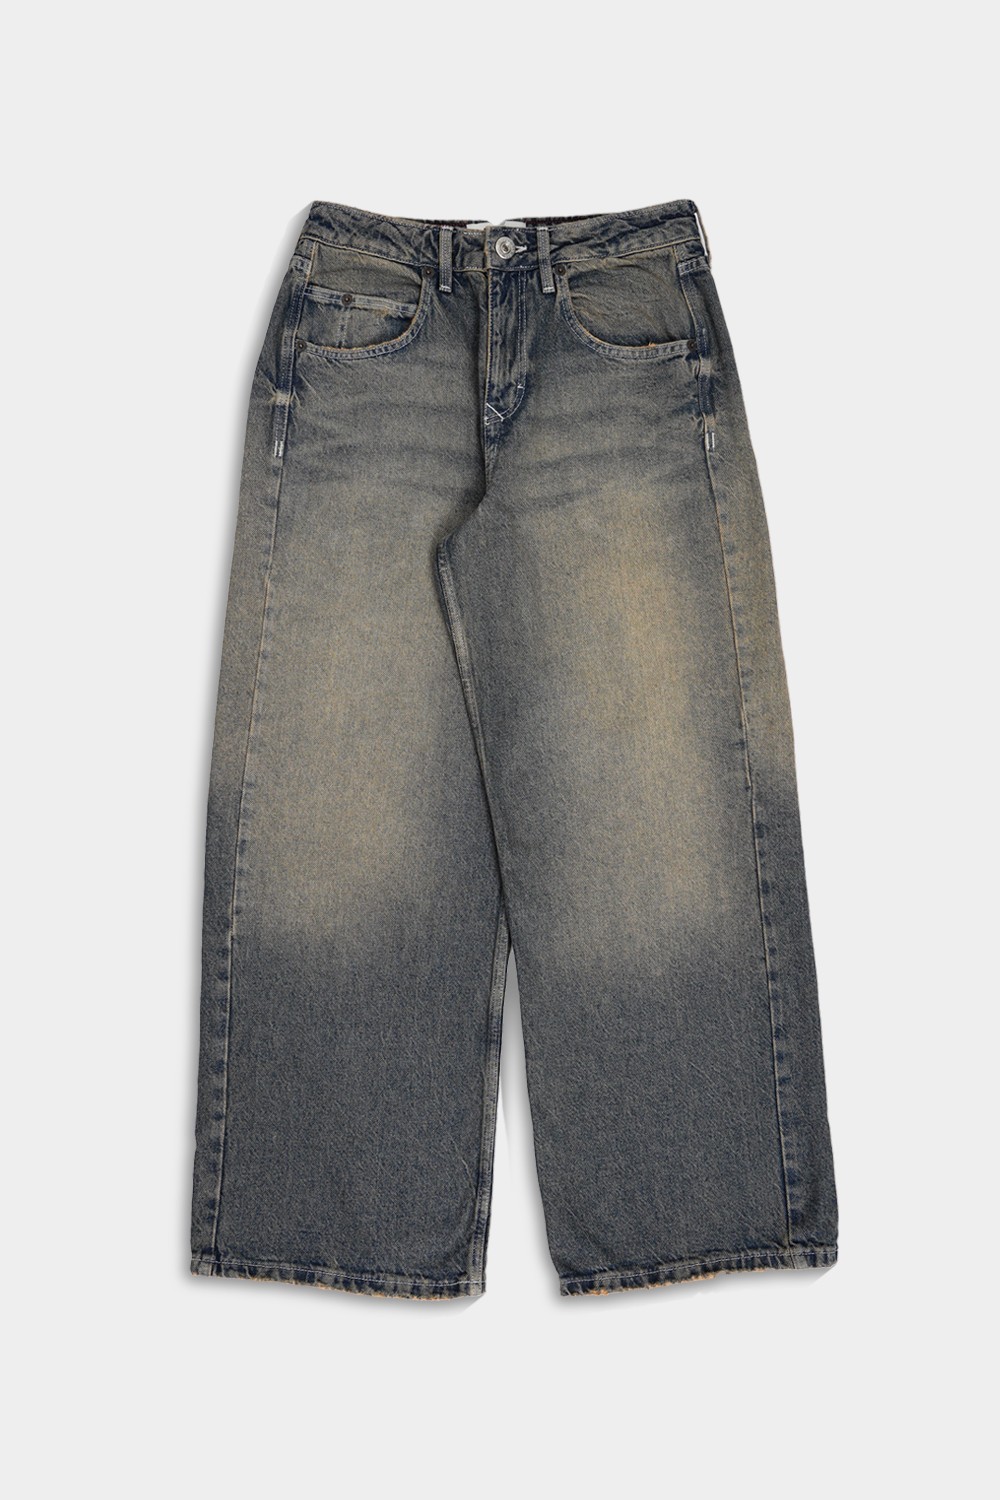 Dirty Tint Jaya Baggy Jeans (URBN-B-237)